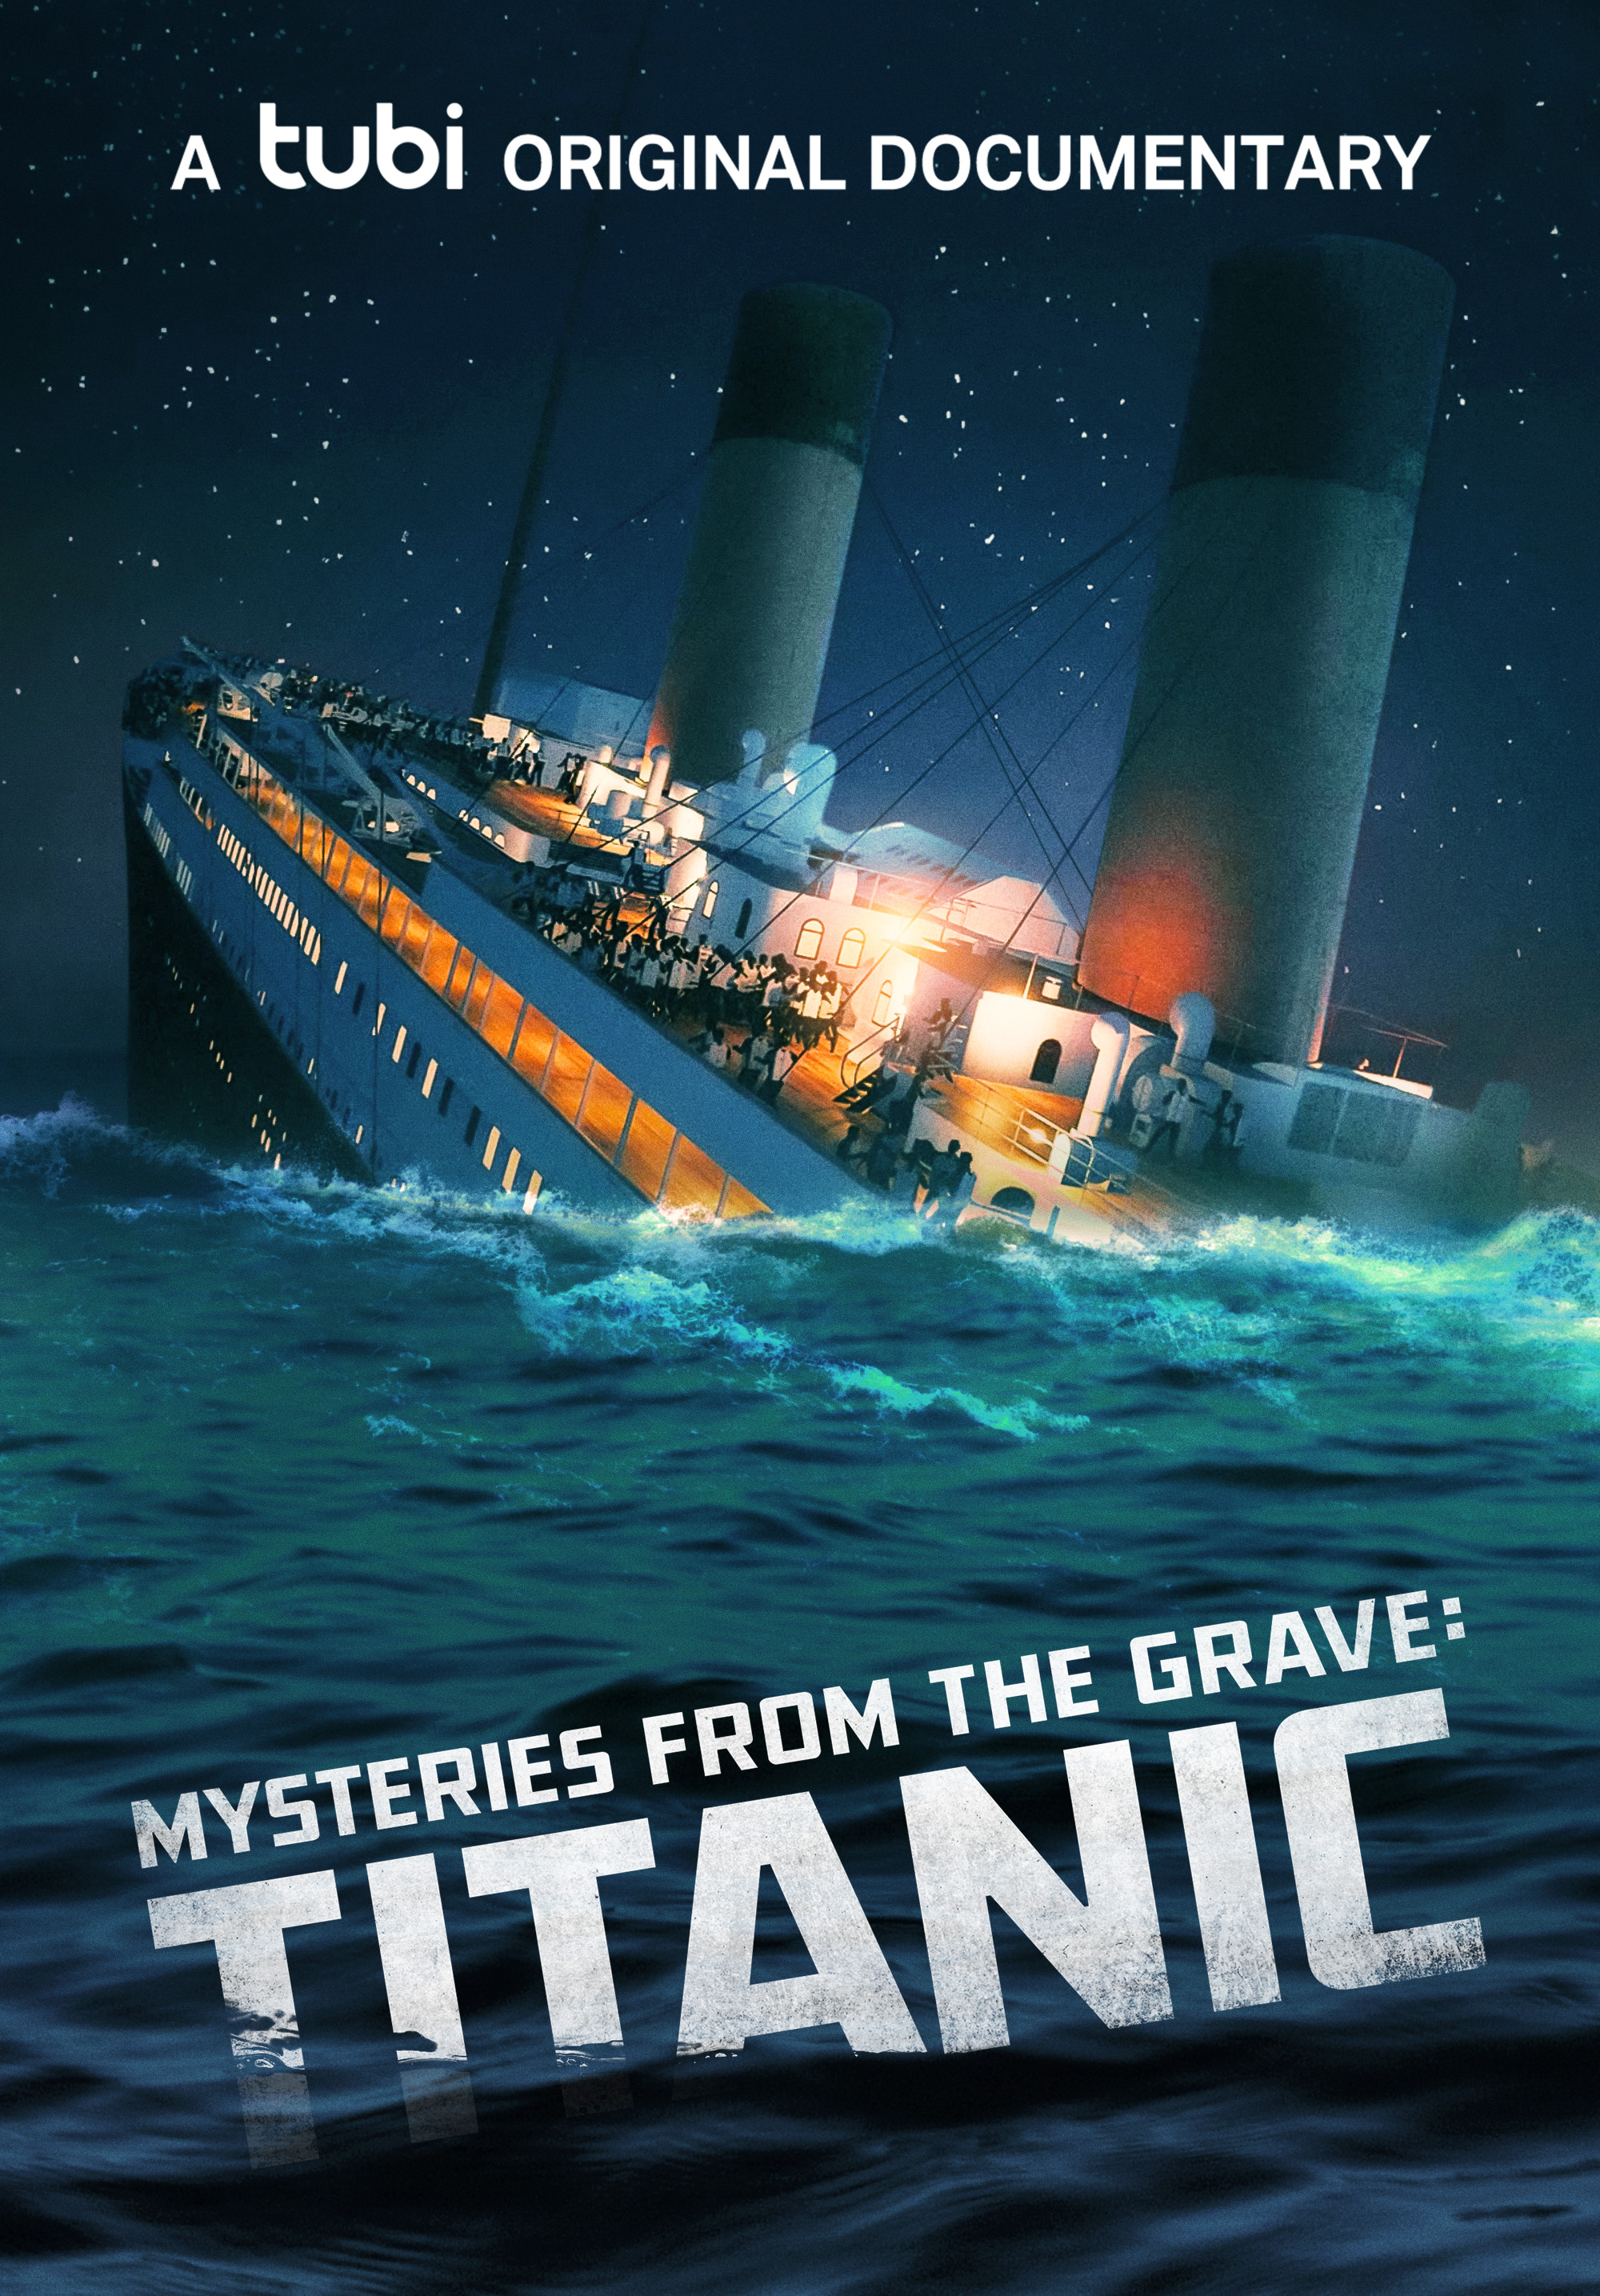 Nonton film Mysteries from the Grave: Titanic layarkaca21 indoxx1 ganool online streaming terbaru